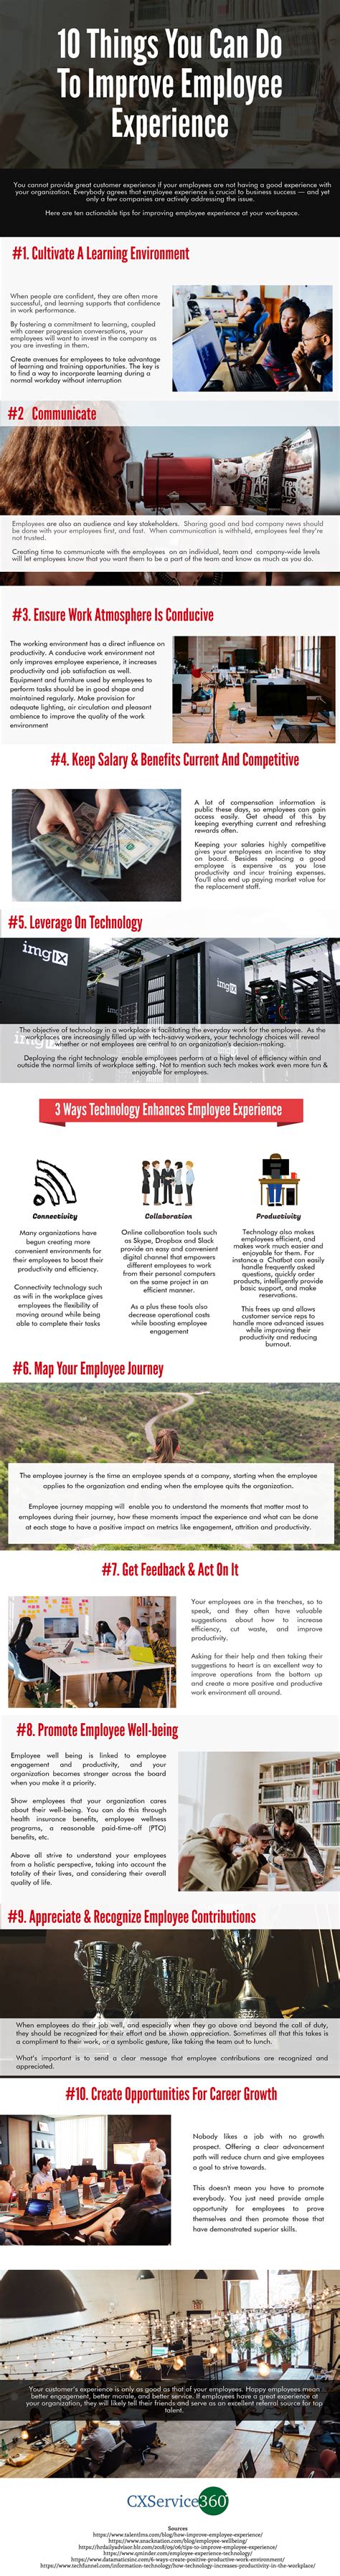 improve employee experience infographic customerthink infographic